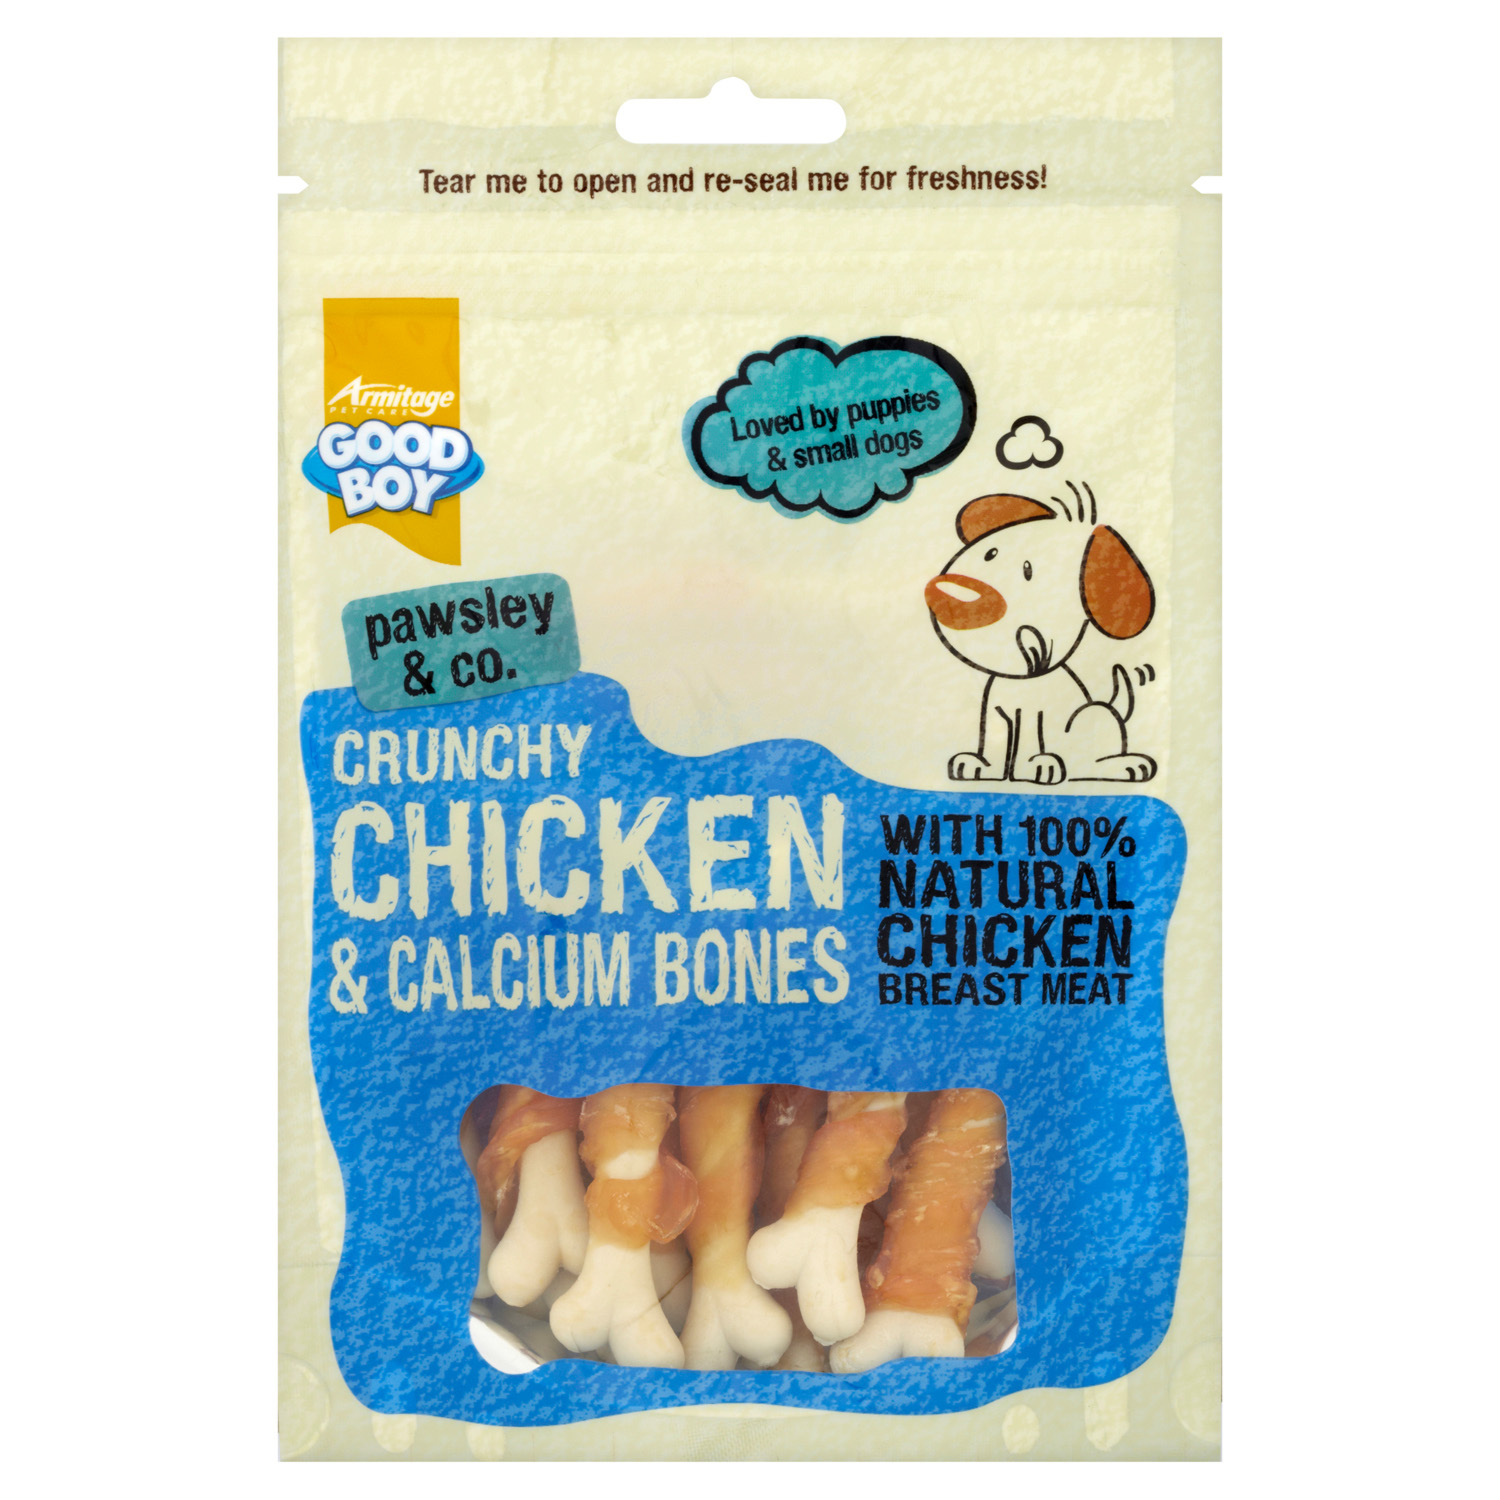 Good Boy Crunchy Chicken and Calcium Bones Dog Treats 100g Image